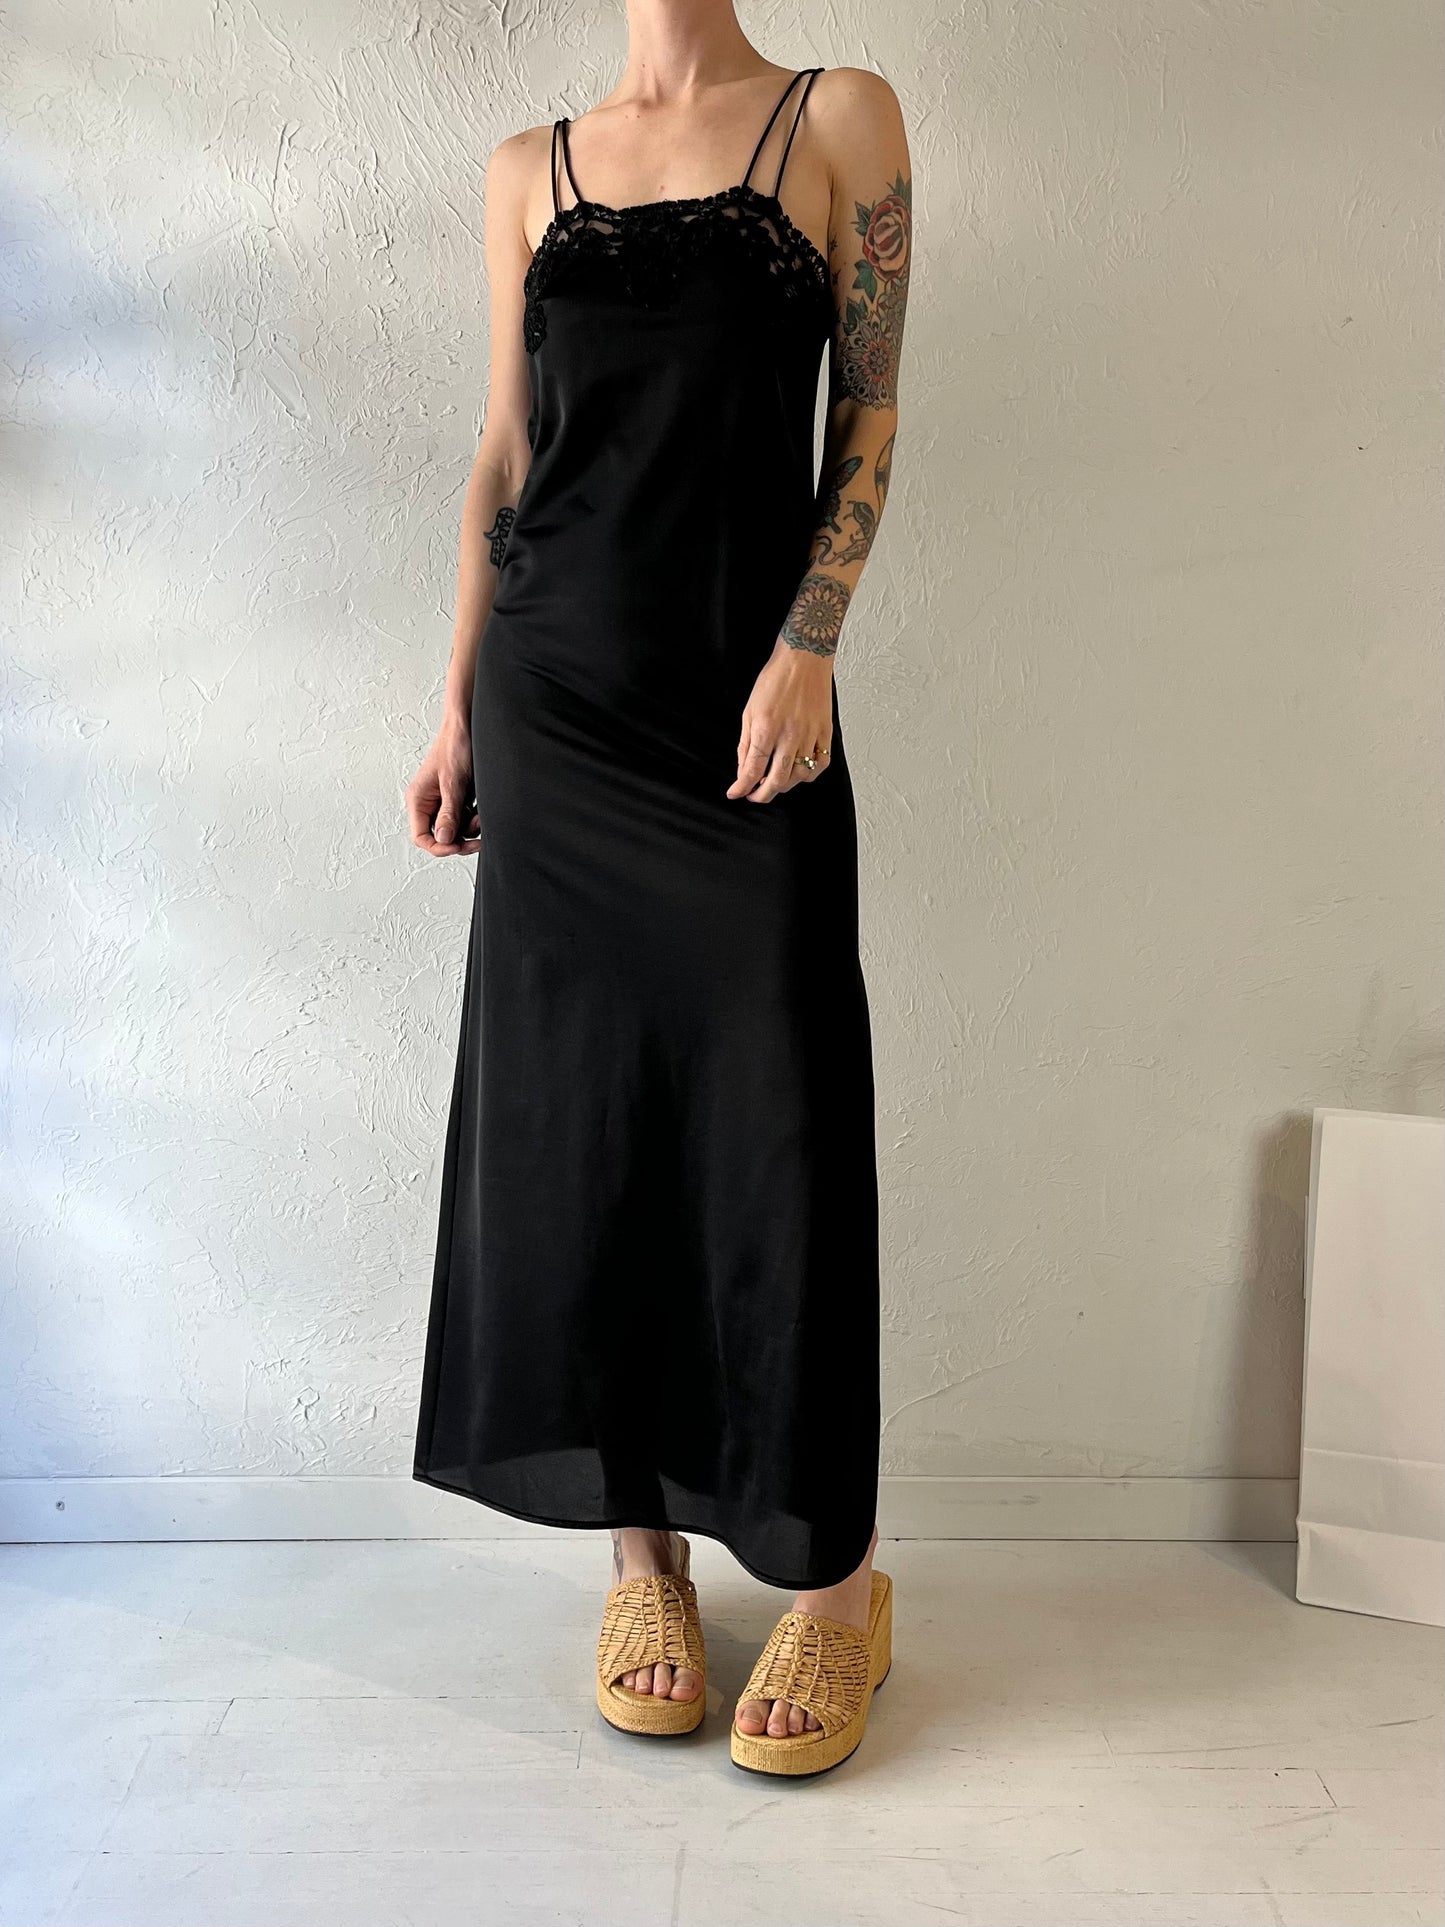 90s 'Vanity Fair' Black Slip Dress / Small